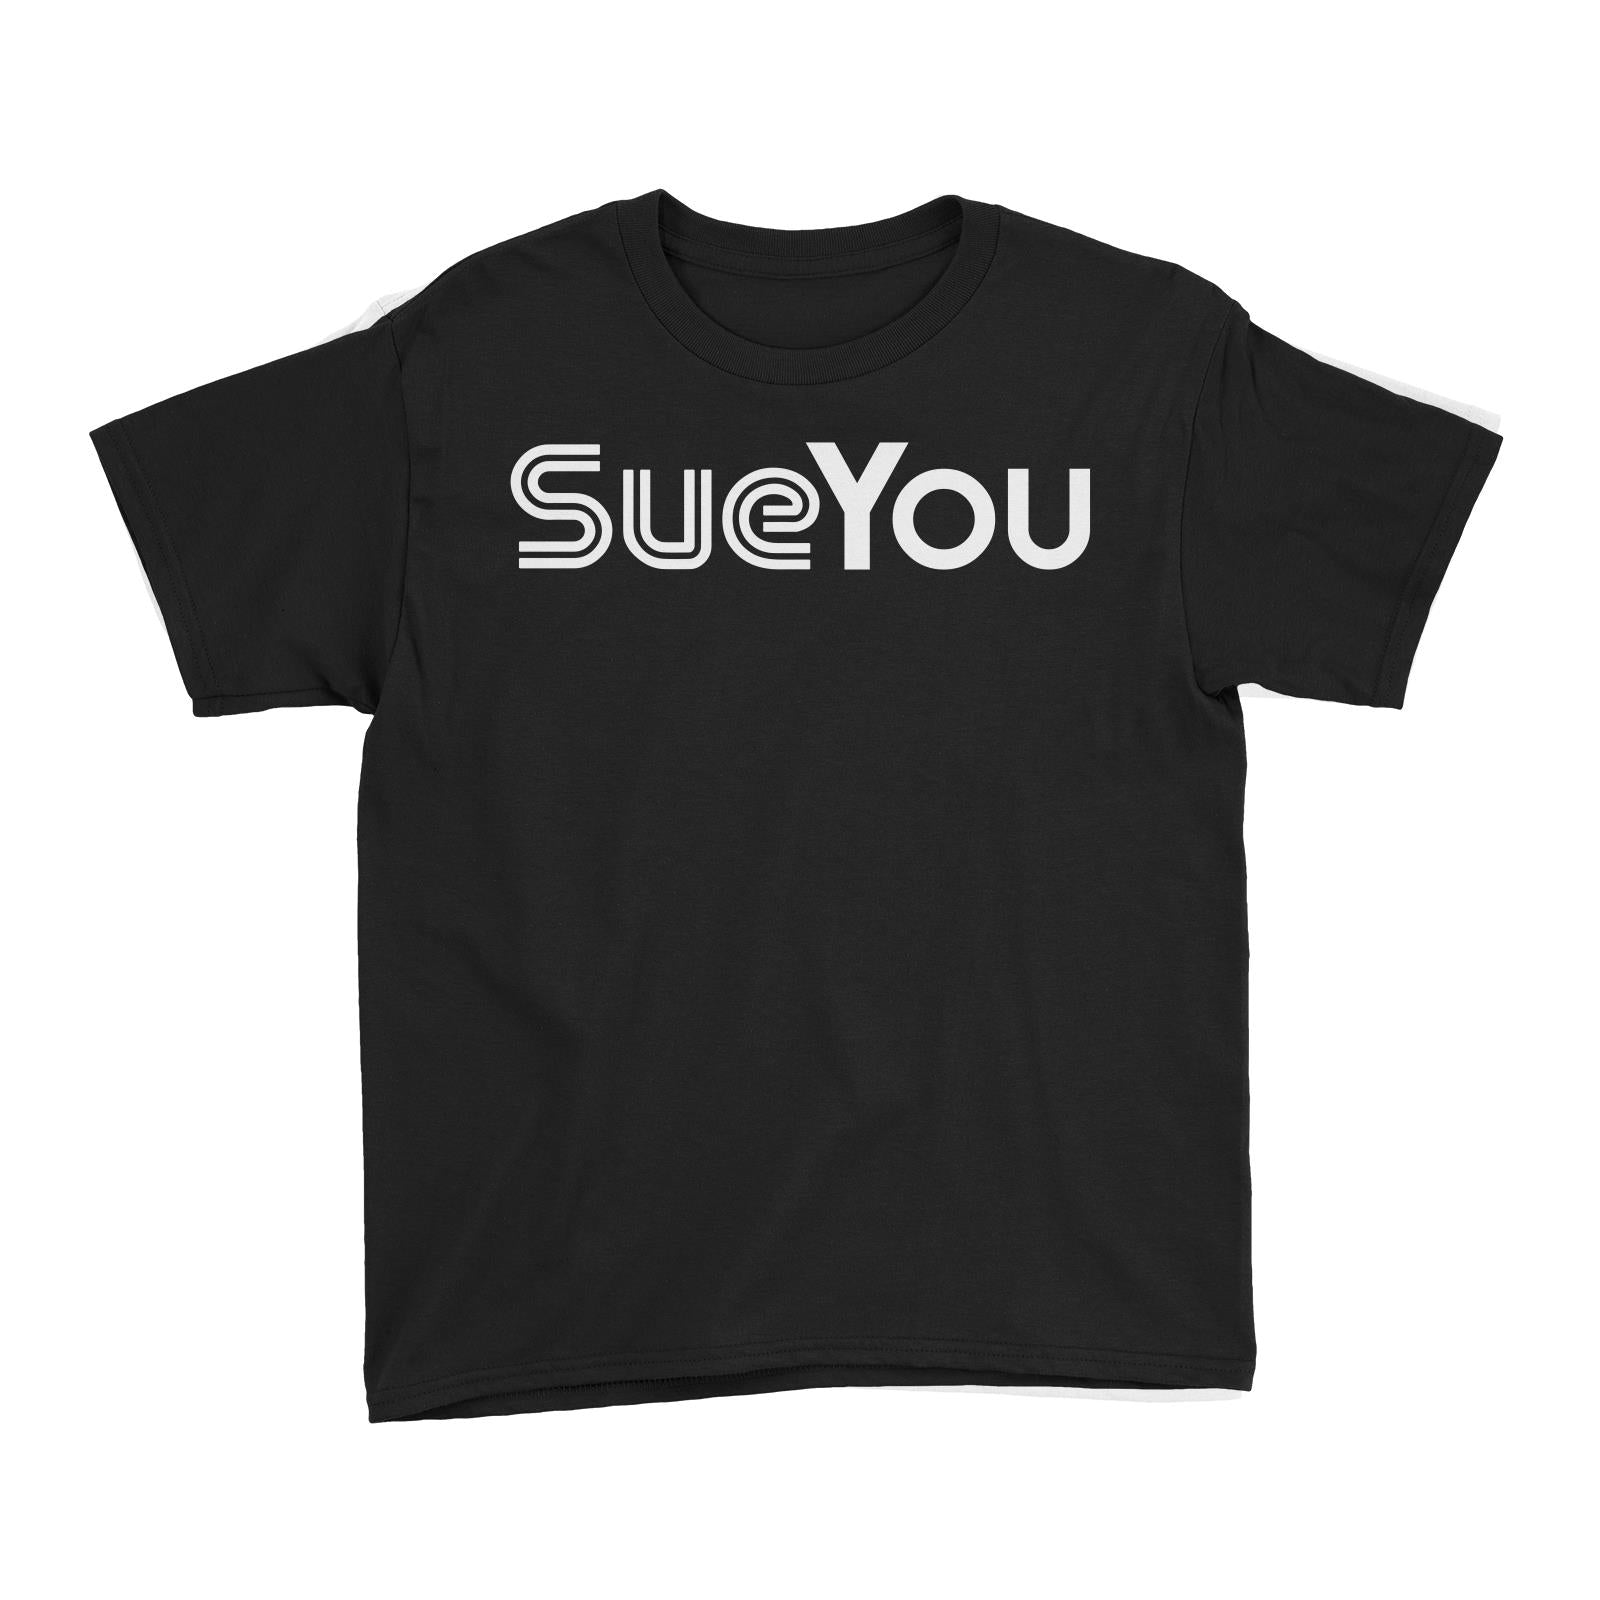 Slang Statement SueYou Kid's T-Shirt